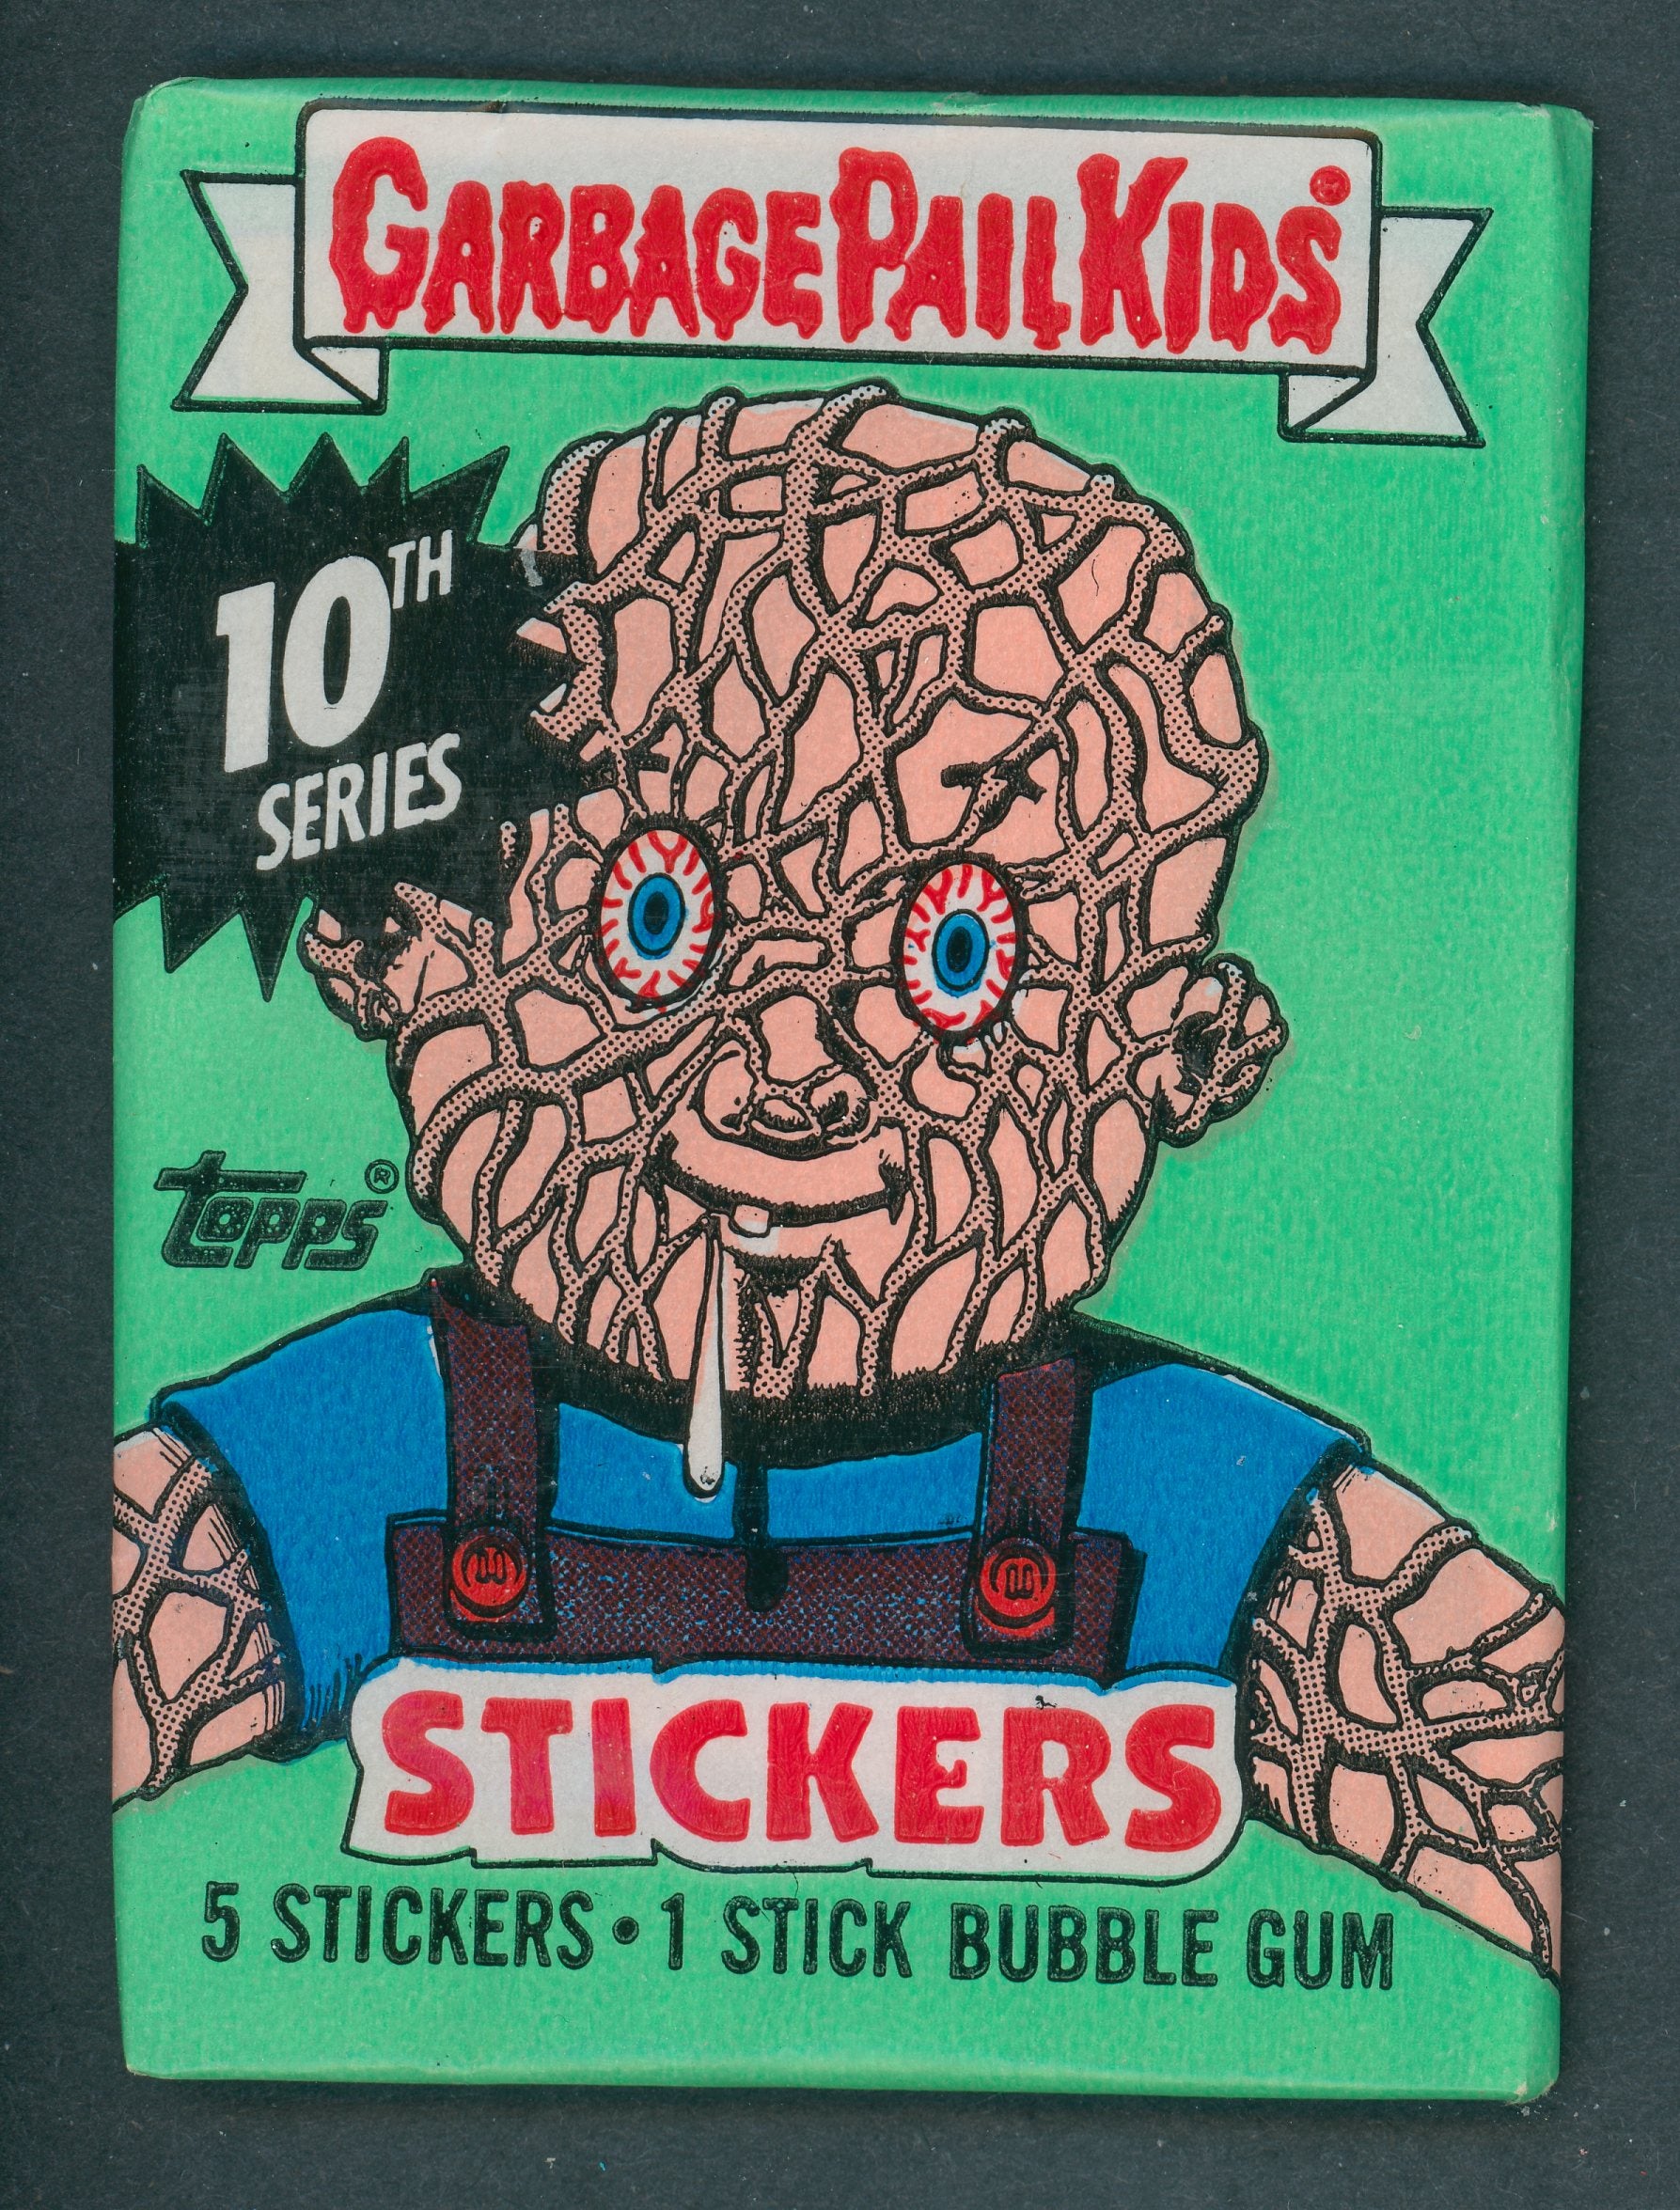 1987 Topps Garbage Pail Kids Series 10 Unopened Wax Pack (w/o price)